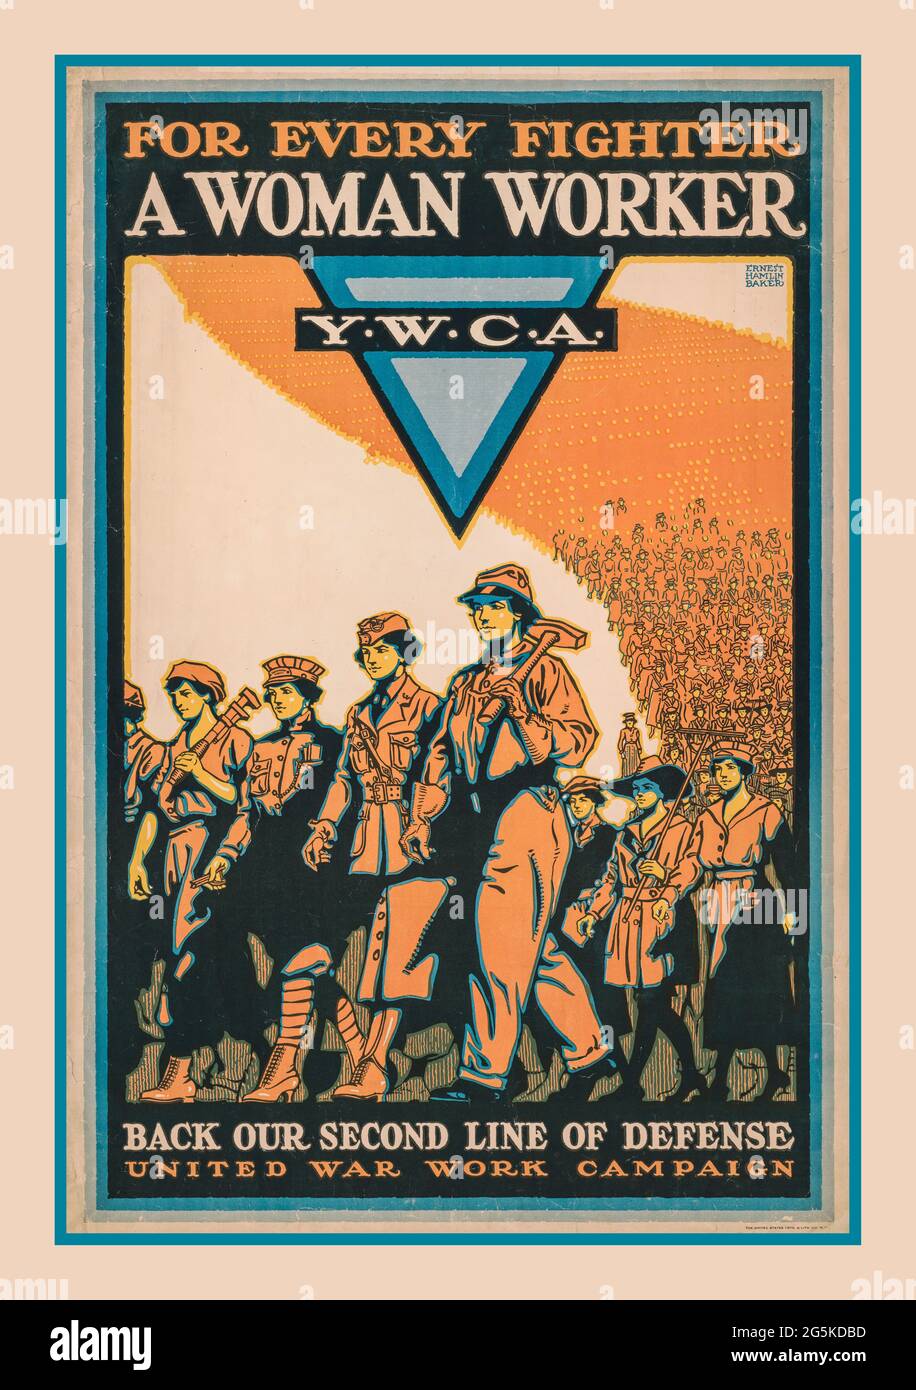 WA23 Vintage WWI Womens War Time Fund Raising British WW1 Poster Re-Print A4 